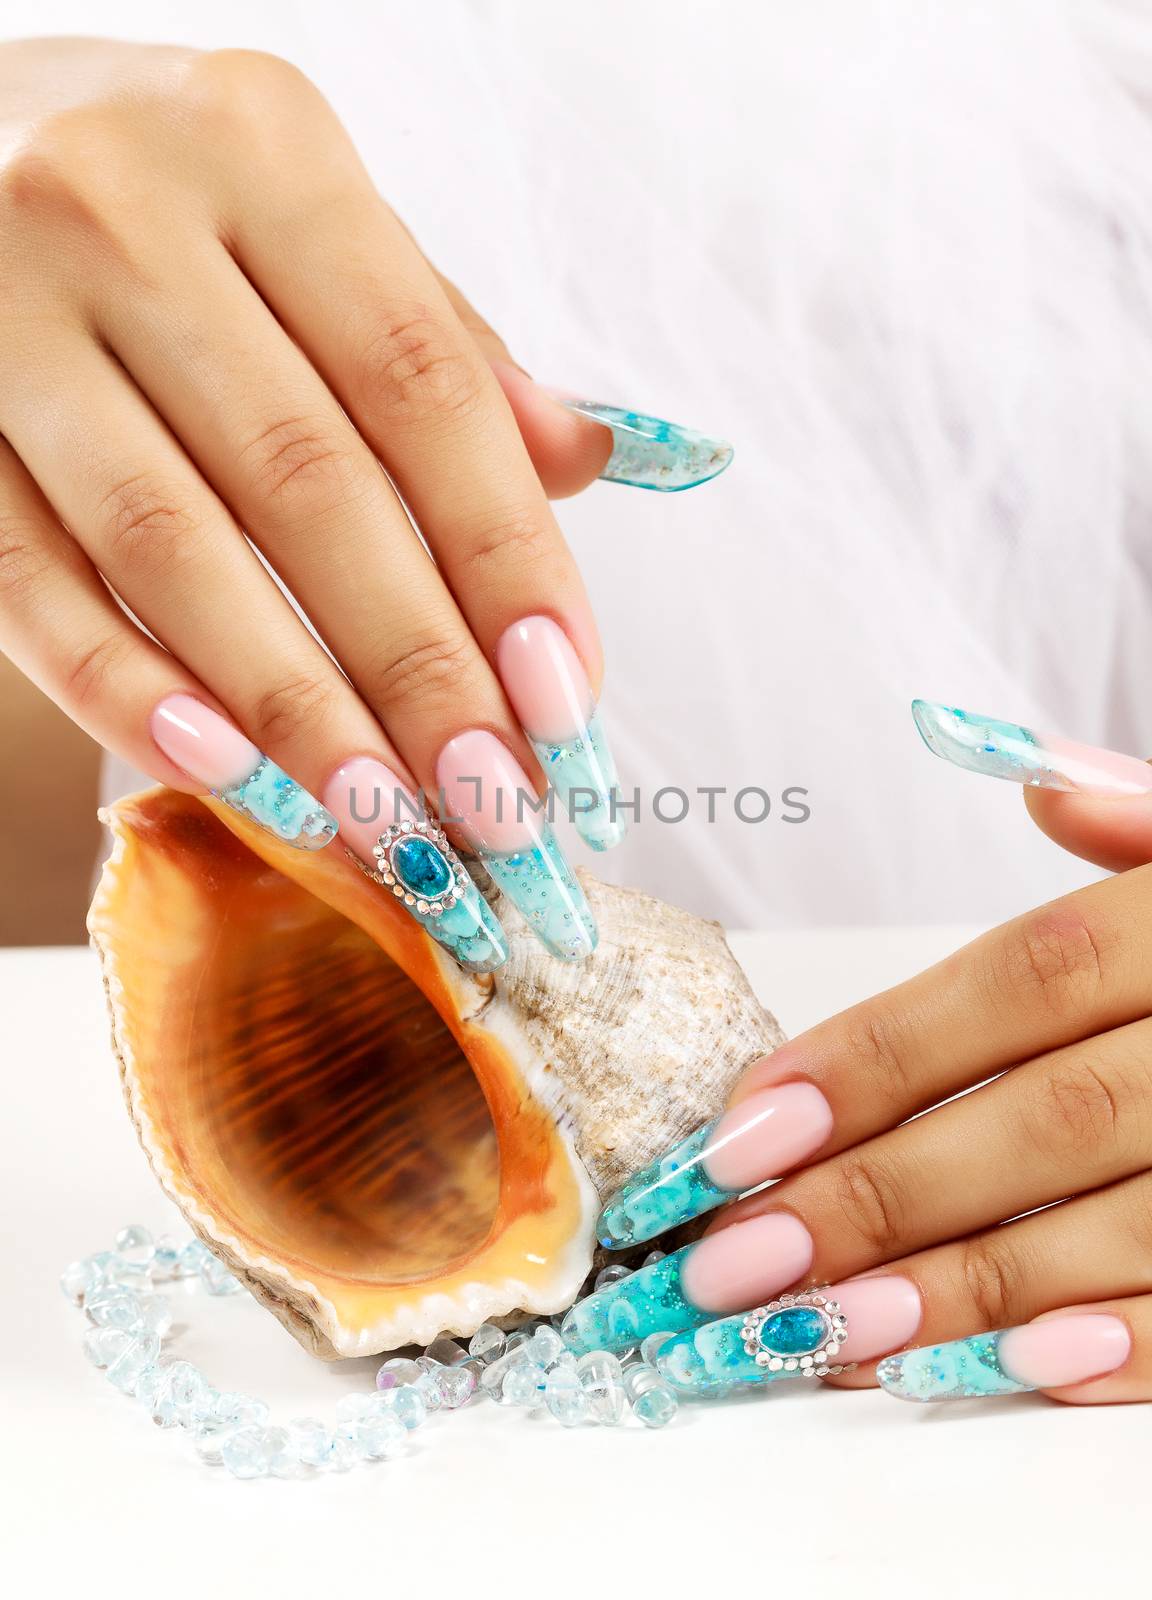 Female hands with long fingernails